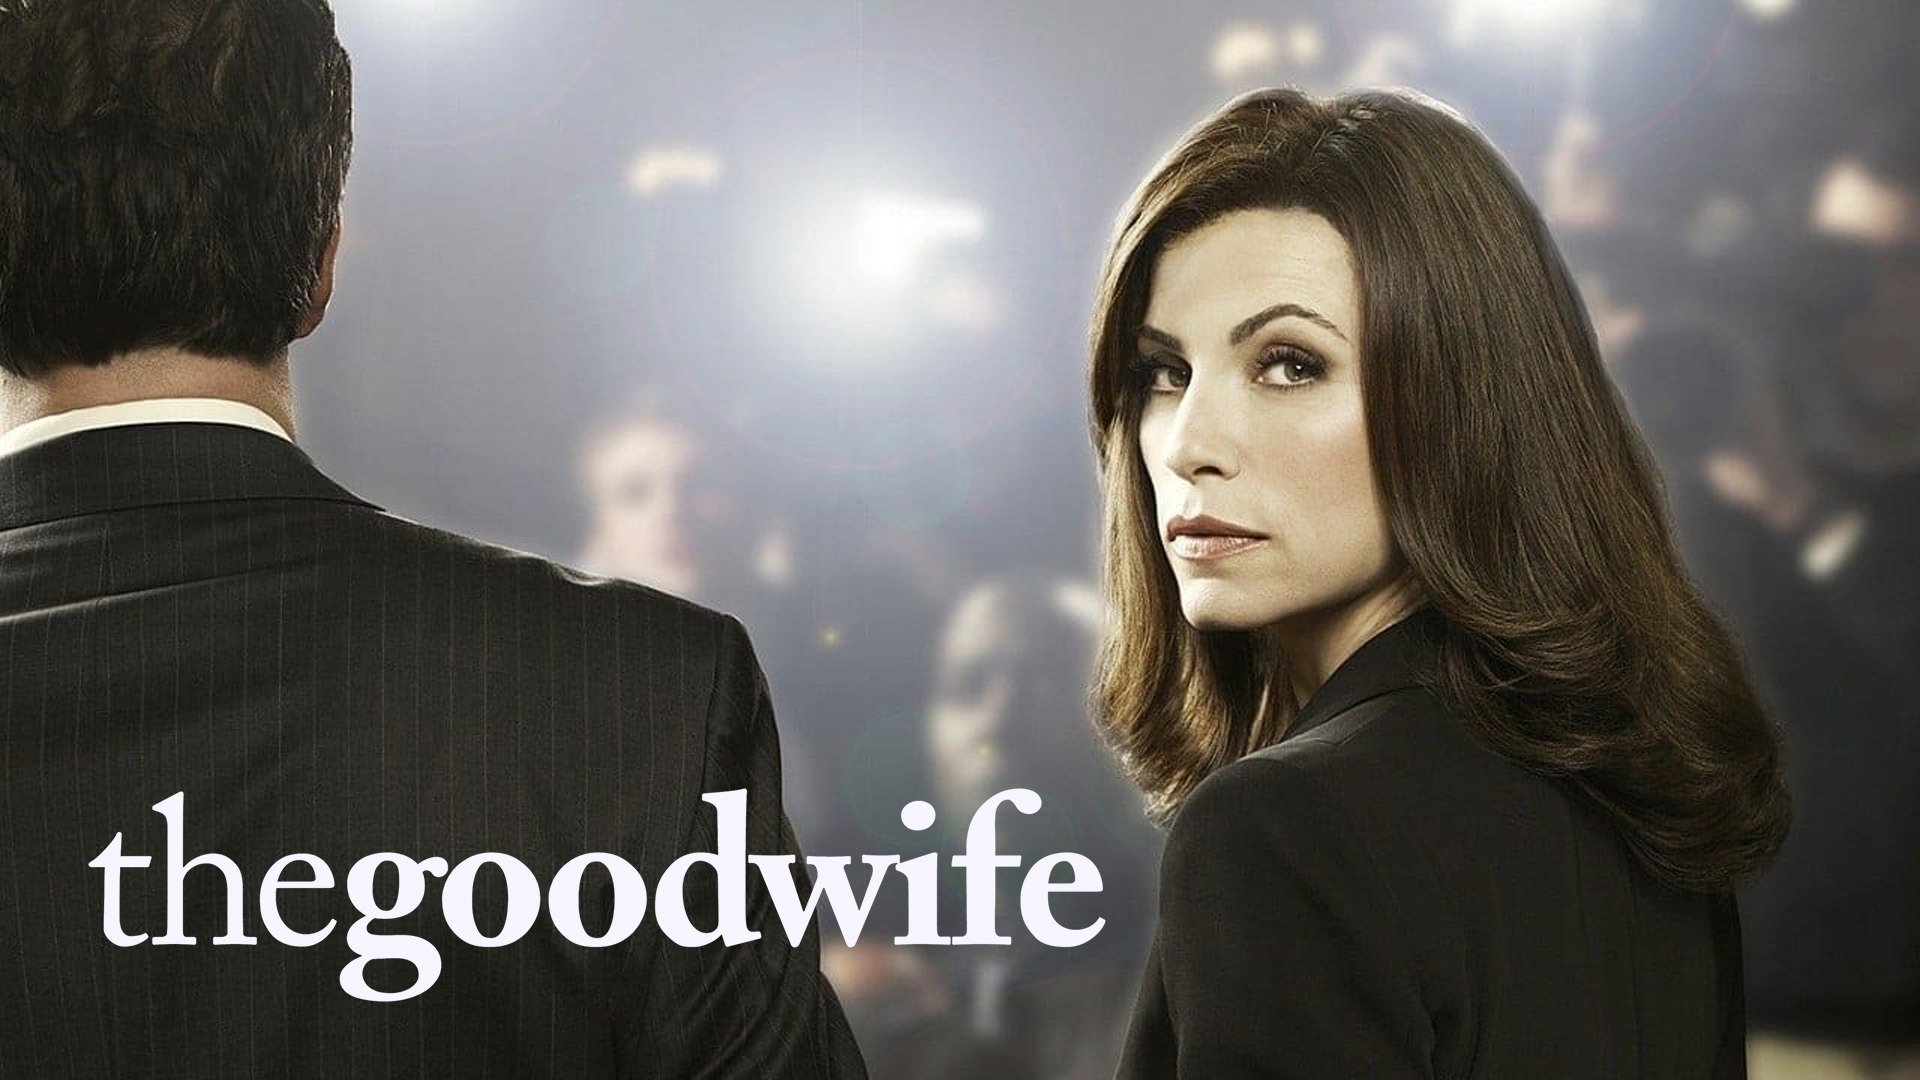 The Good Wife Season 1, Episode 9